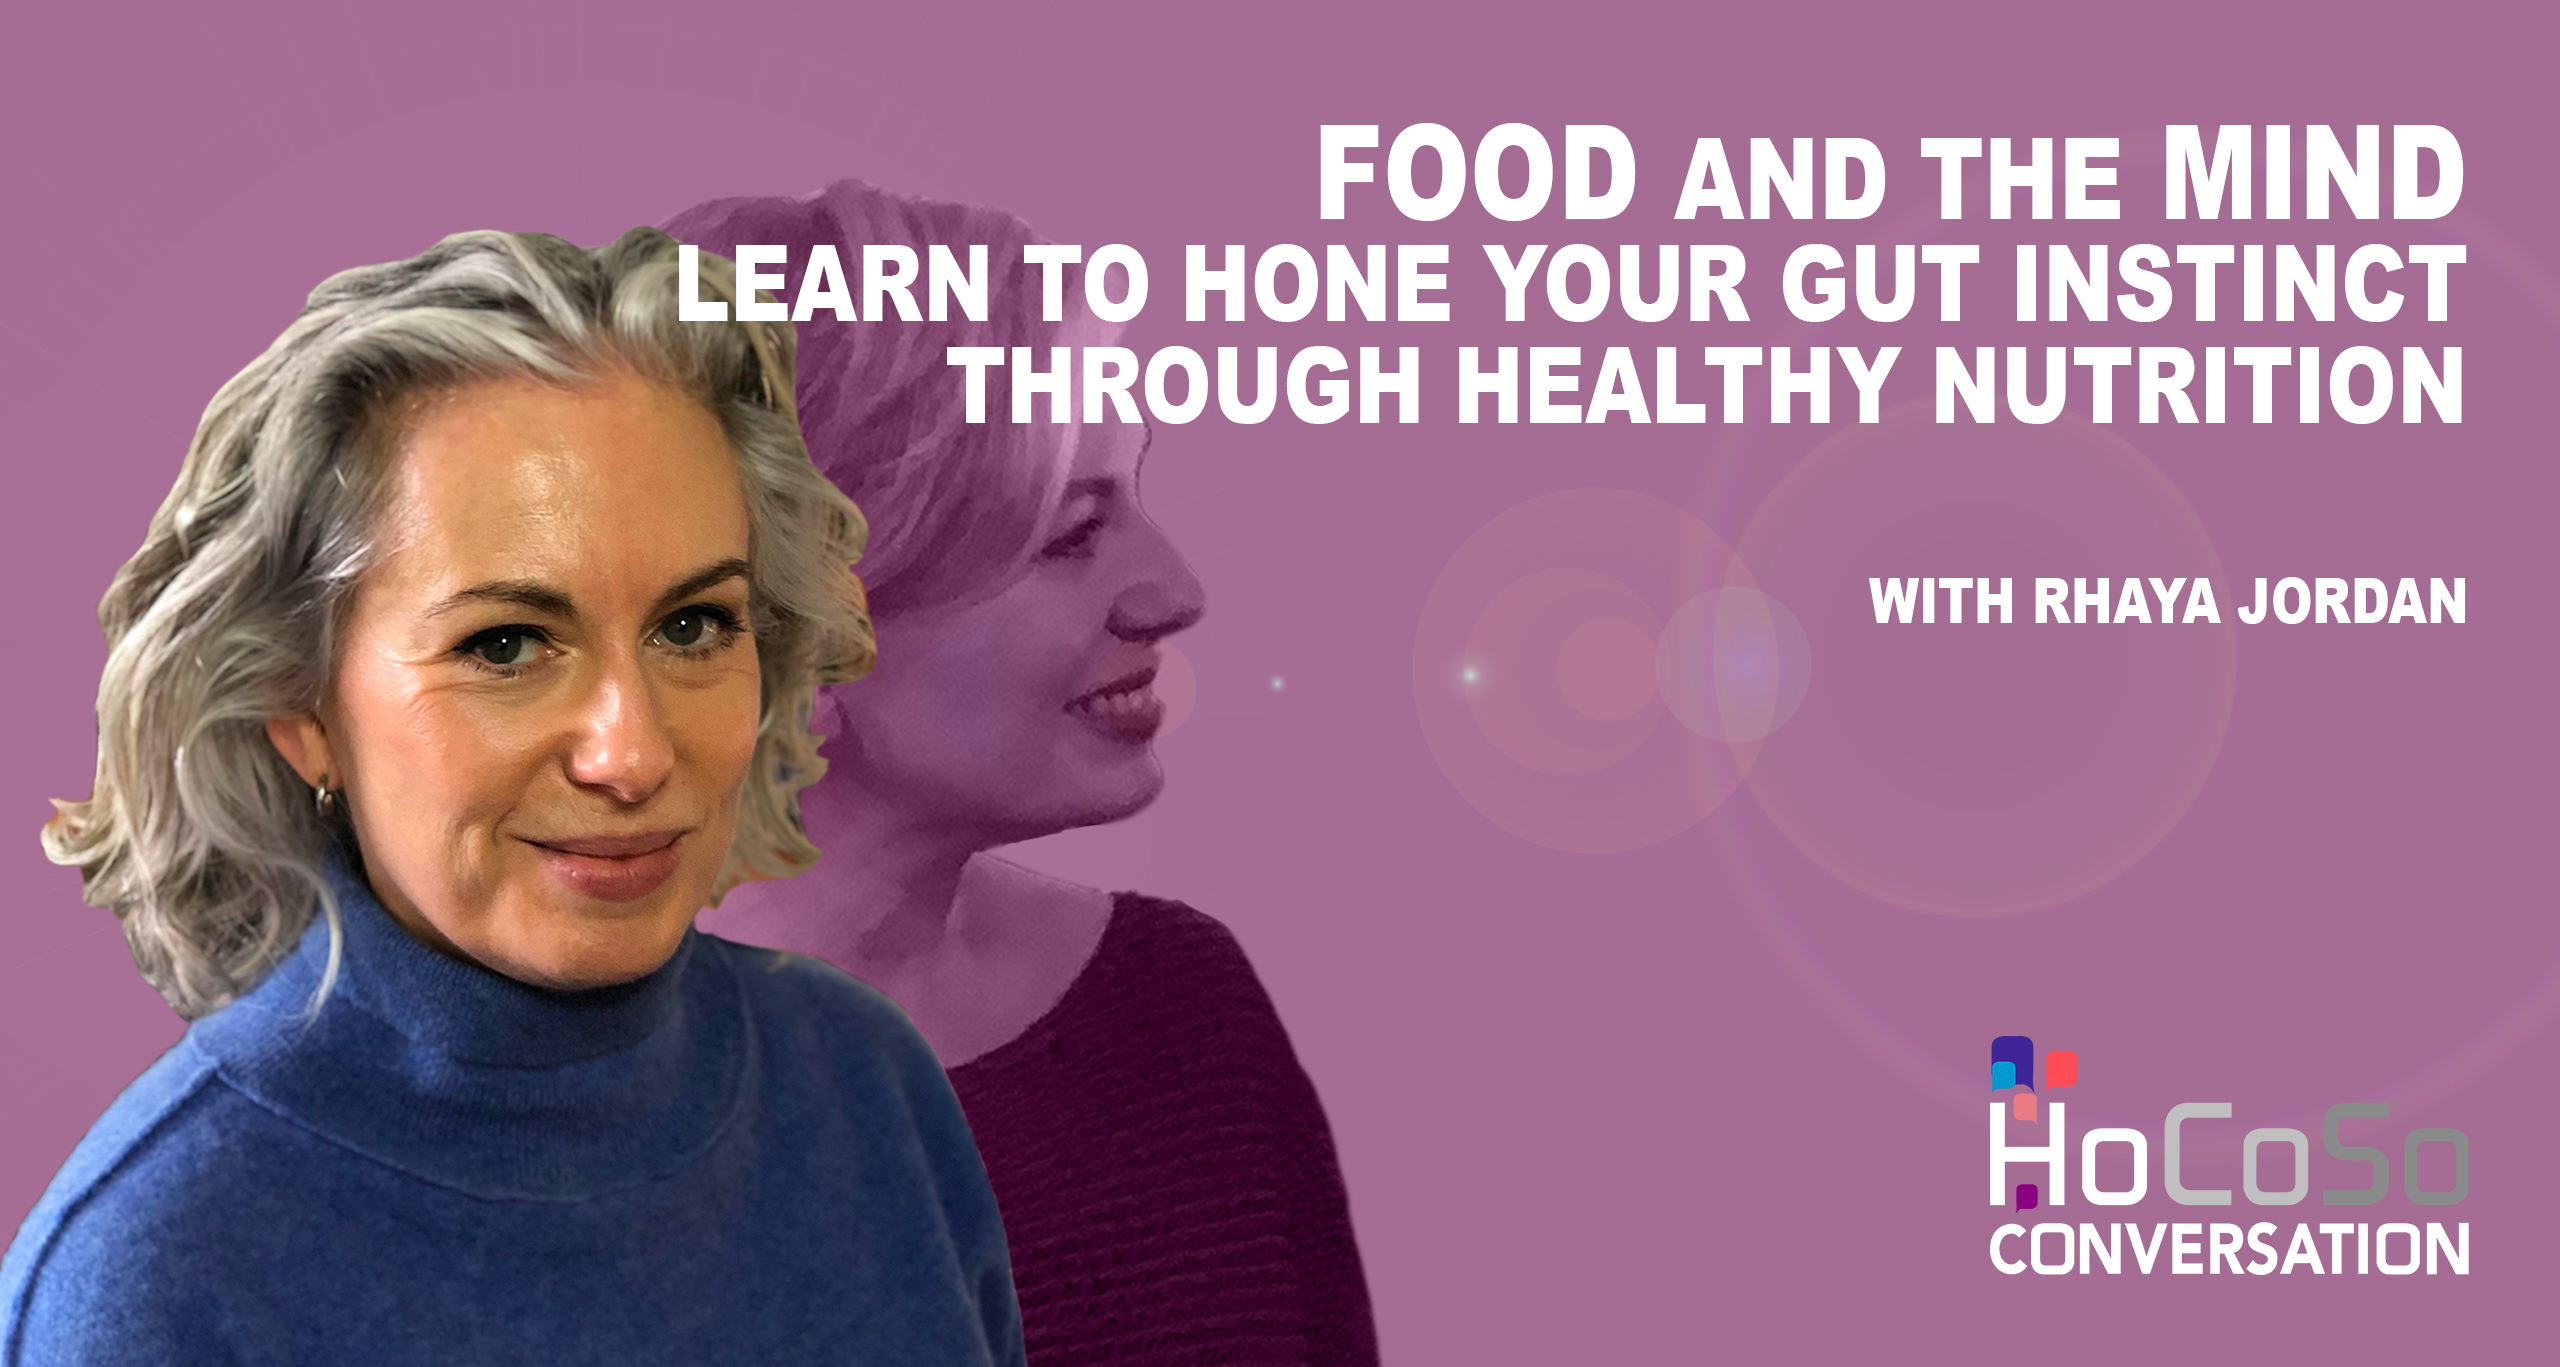 HoCoSo CONVERSATION - Food and Mind / Hone your gut instinct - with Rhaya Jordan